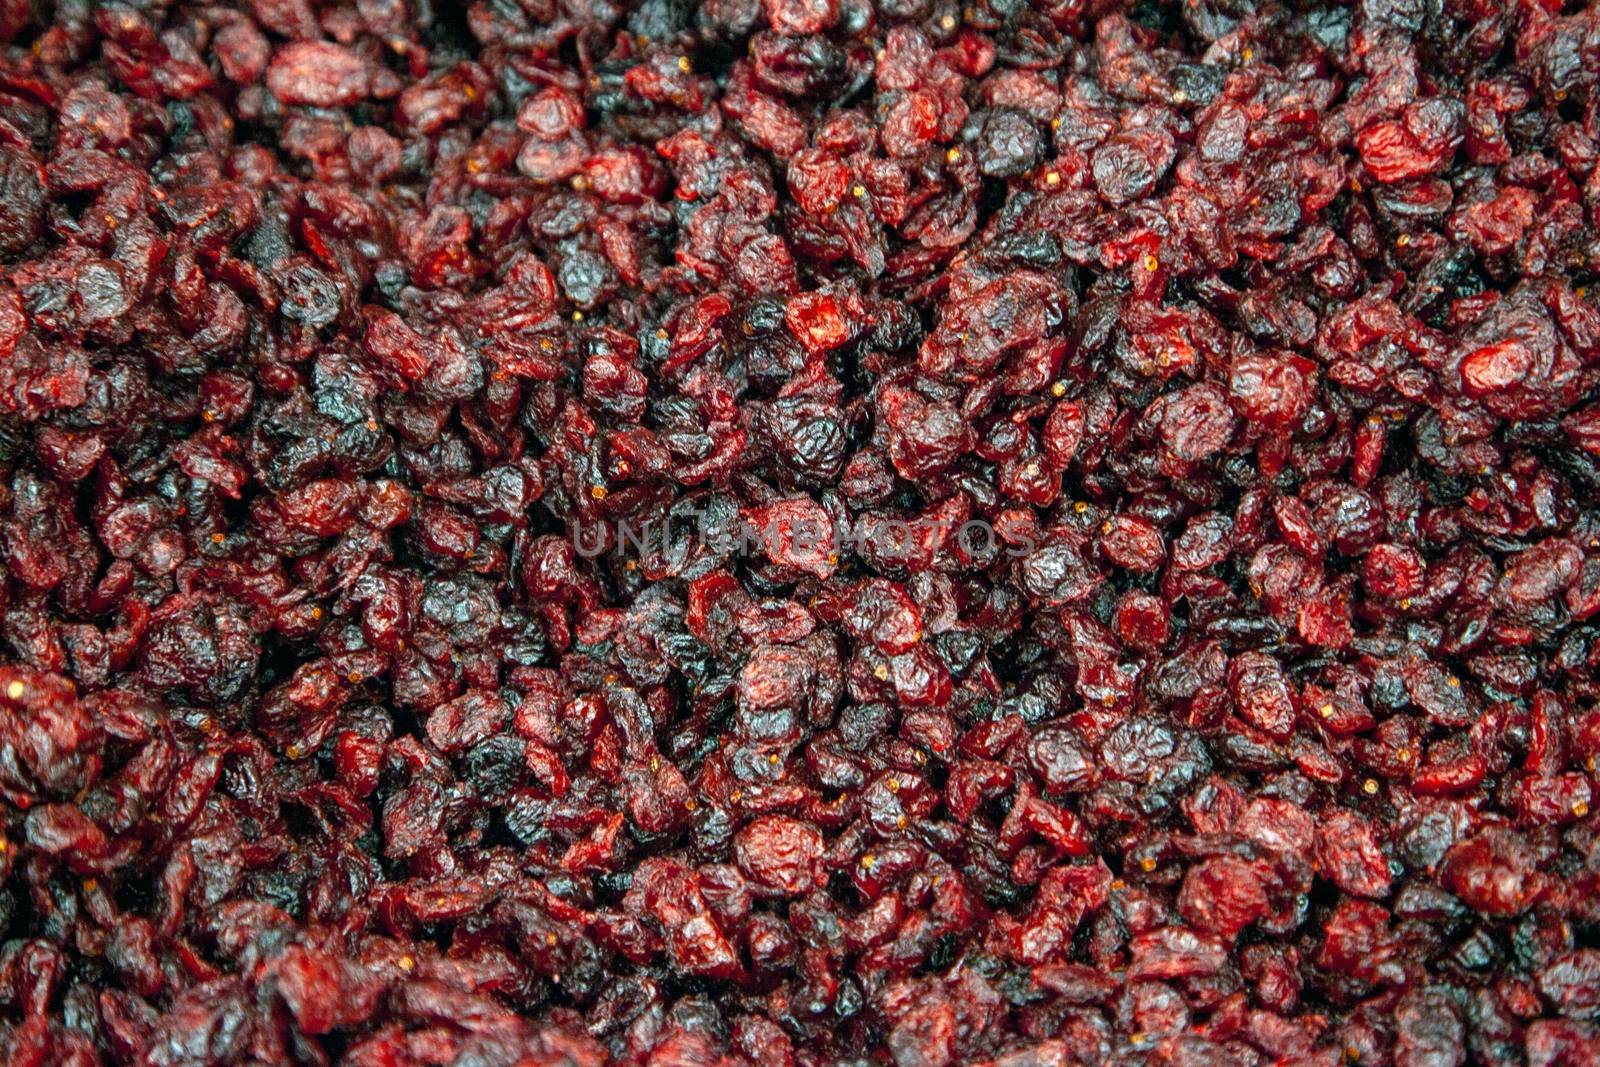 bin of raisins  by rustycanuck